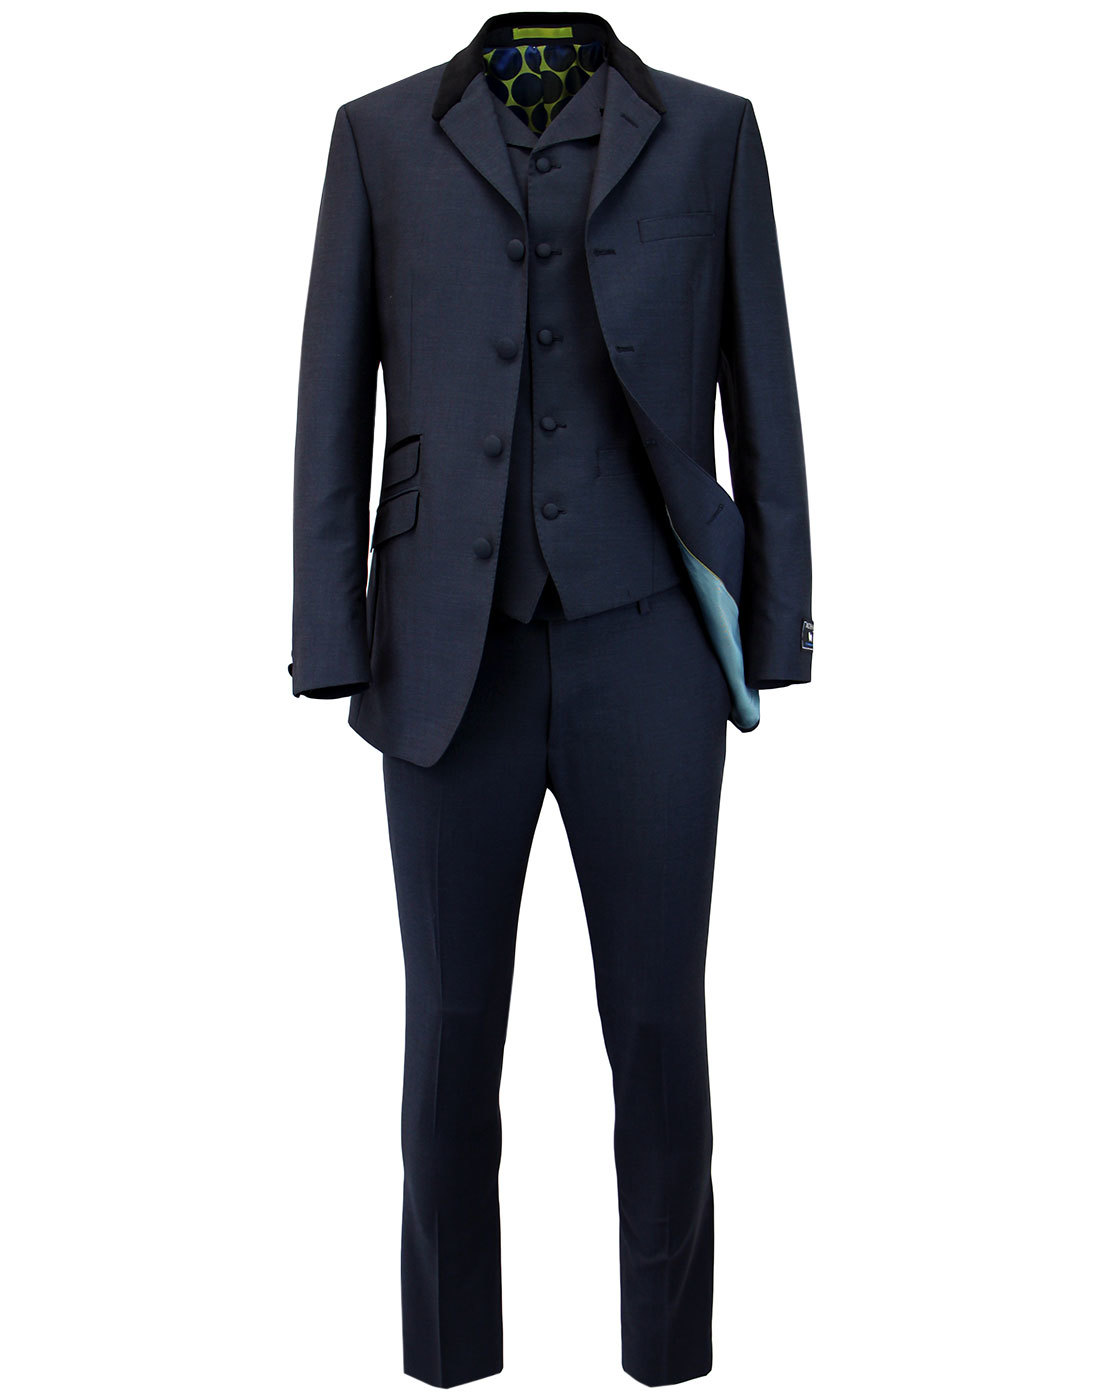 MADCAP ENGLAND Mod Mohair Fab 4 Button Navy Suit